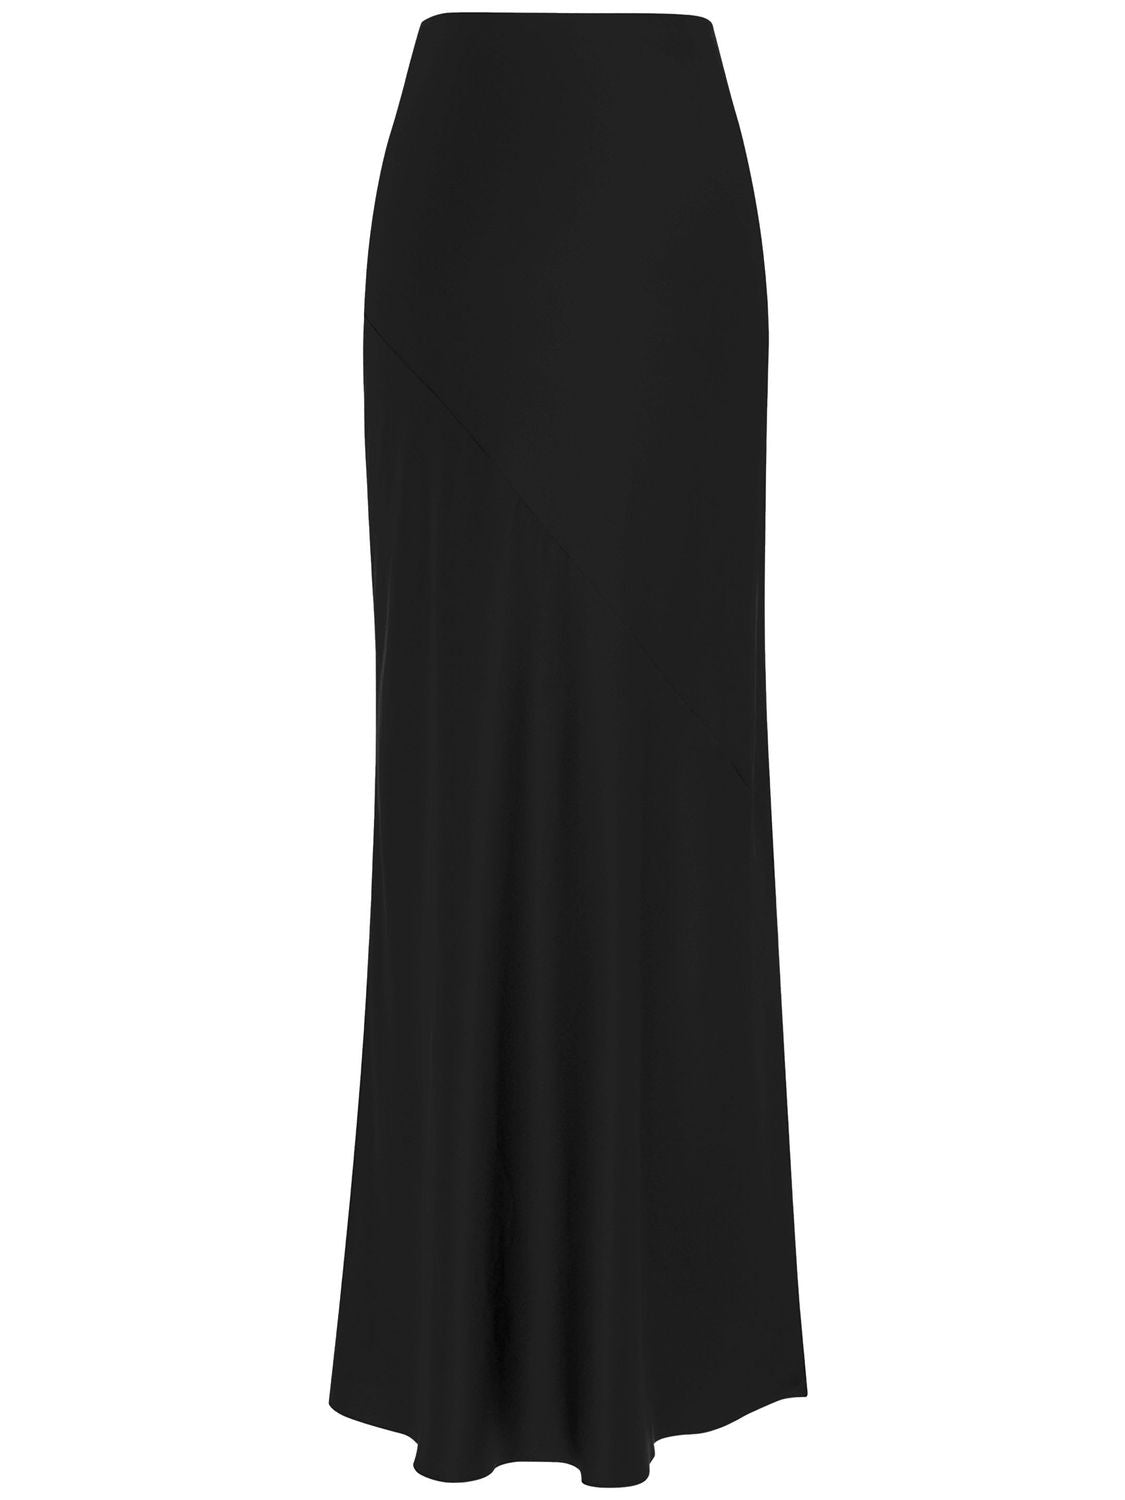 Black Silk Bias Cut Maxi Skirt for Women